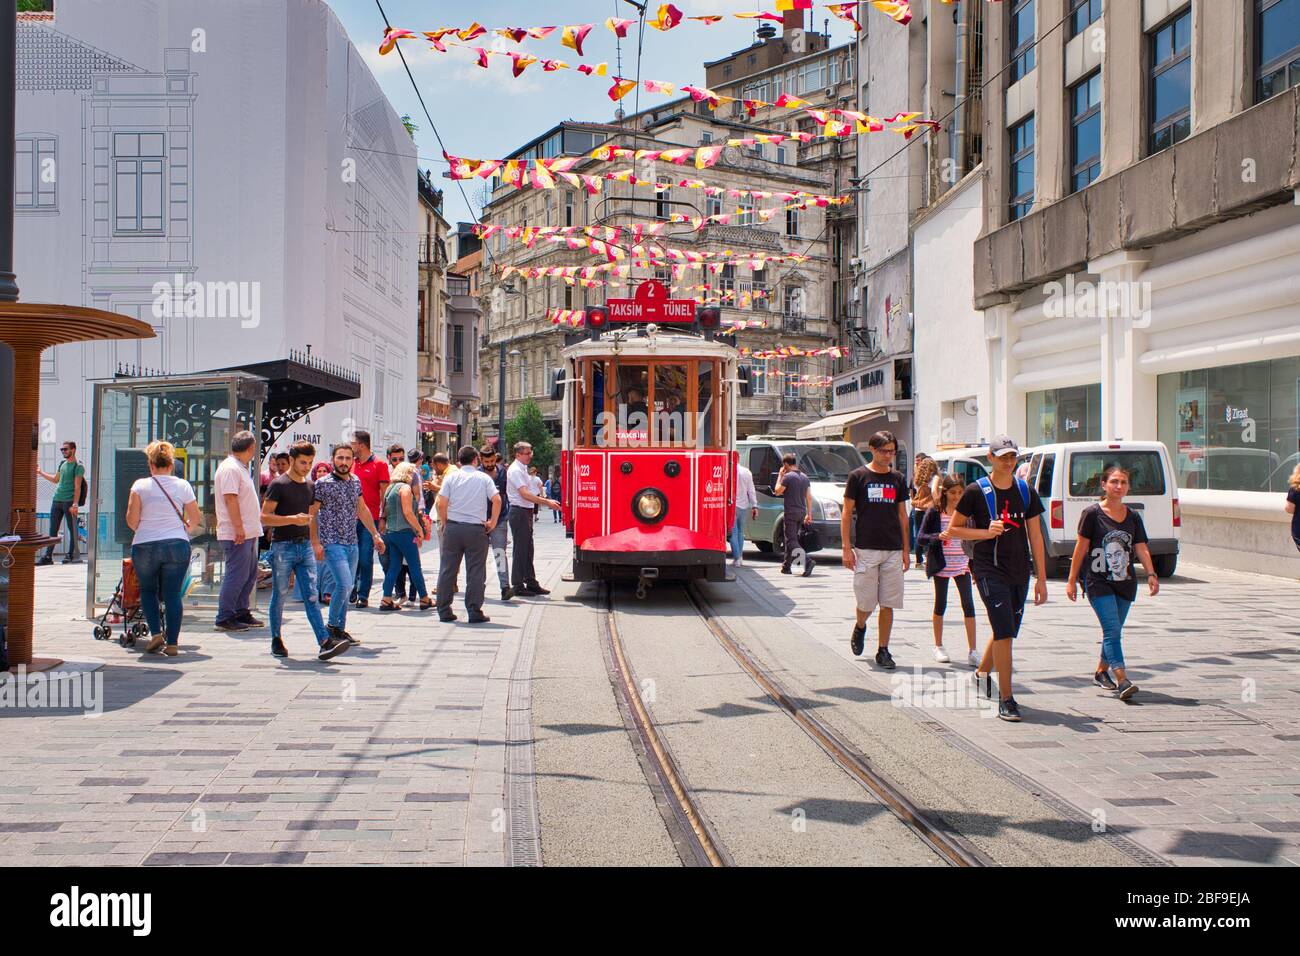 Il nostalgico tram rosso in via Taksim Istiklal a mezzogiorno. Taksim Istiklal Street è una destinazione popolare a Istanbul. Beyoglu, Taksim, Istanbul. Turchia. Foto Stock